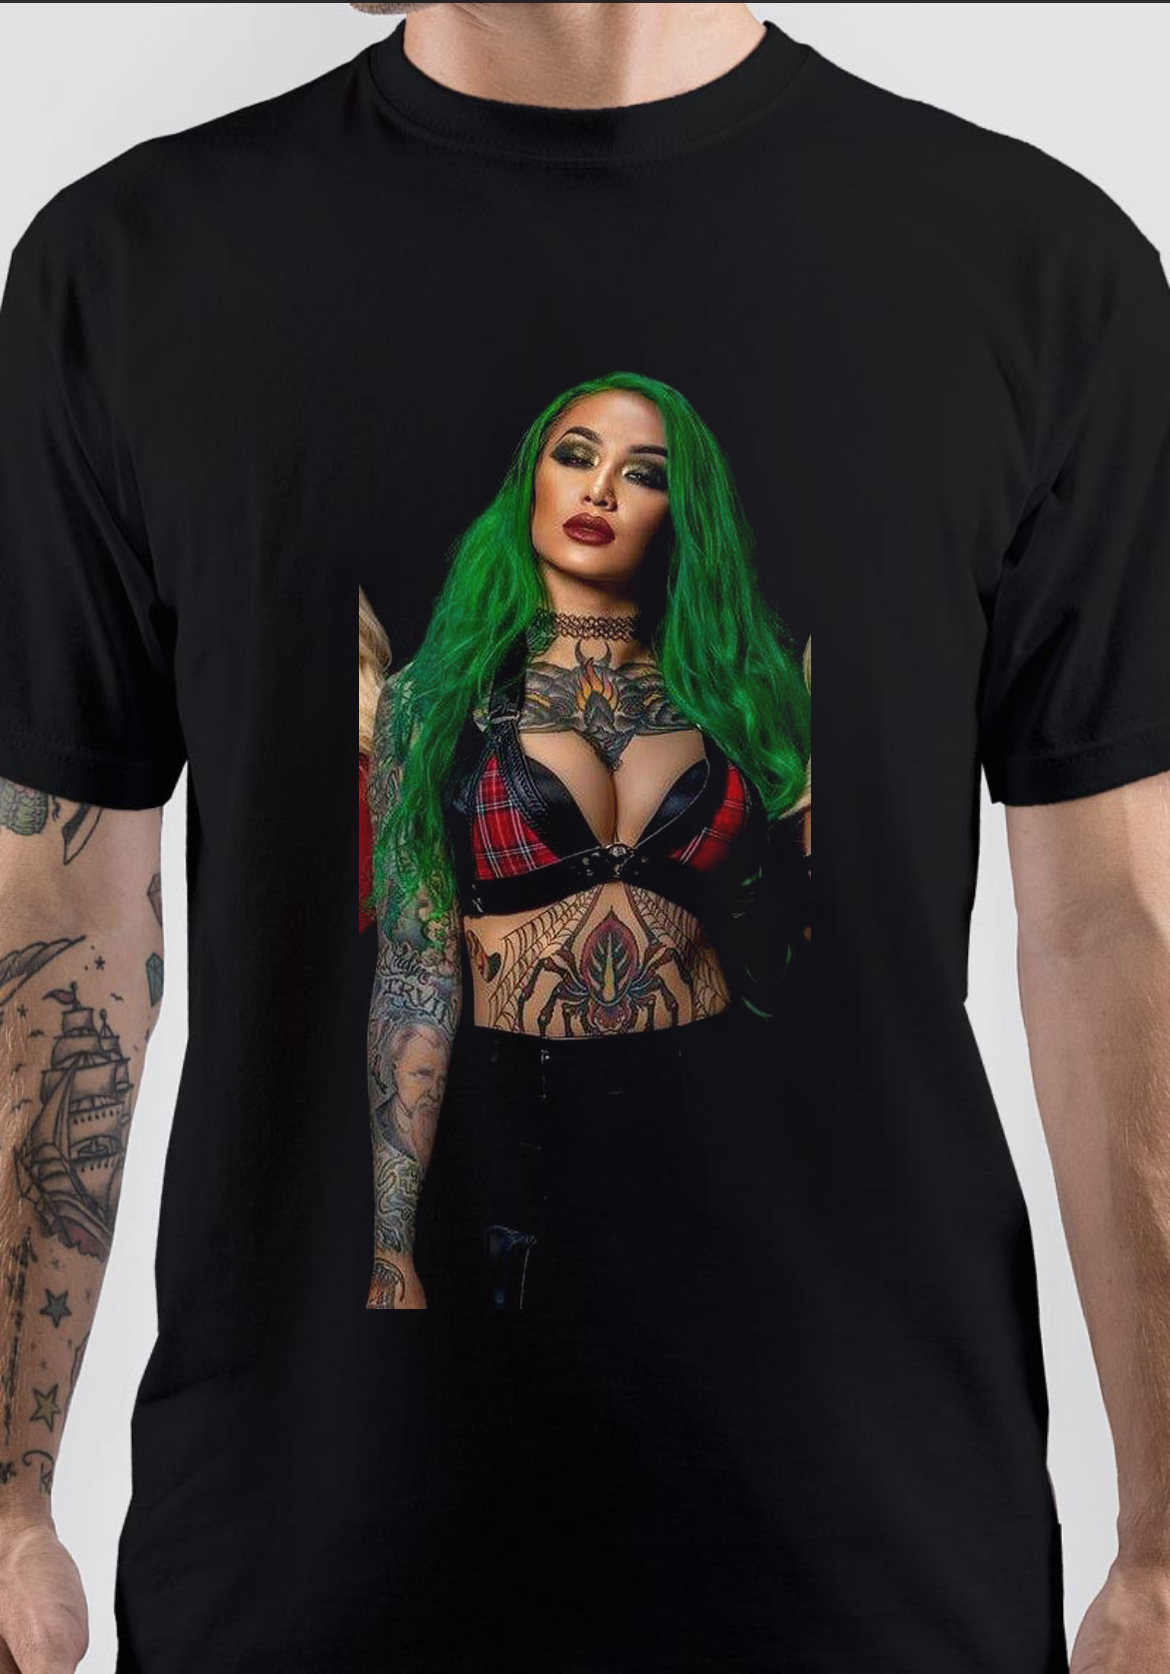 Shotzi Blackheart T-Shirt And Merchandise